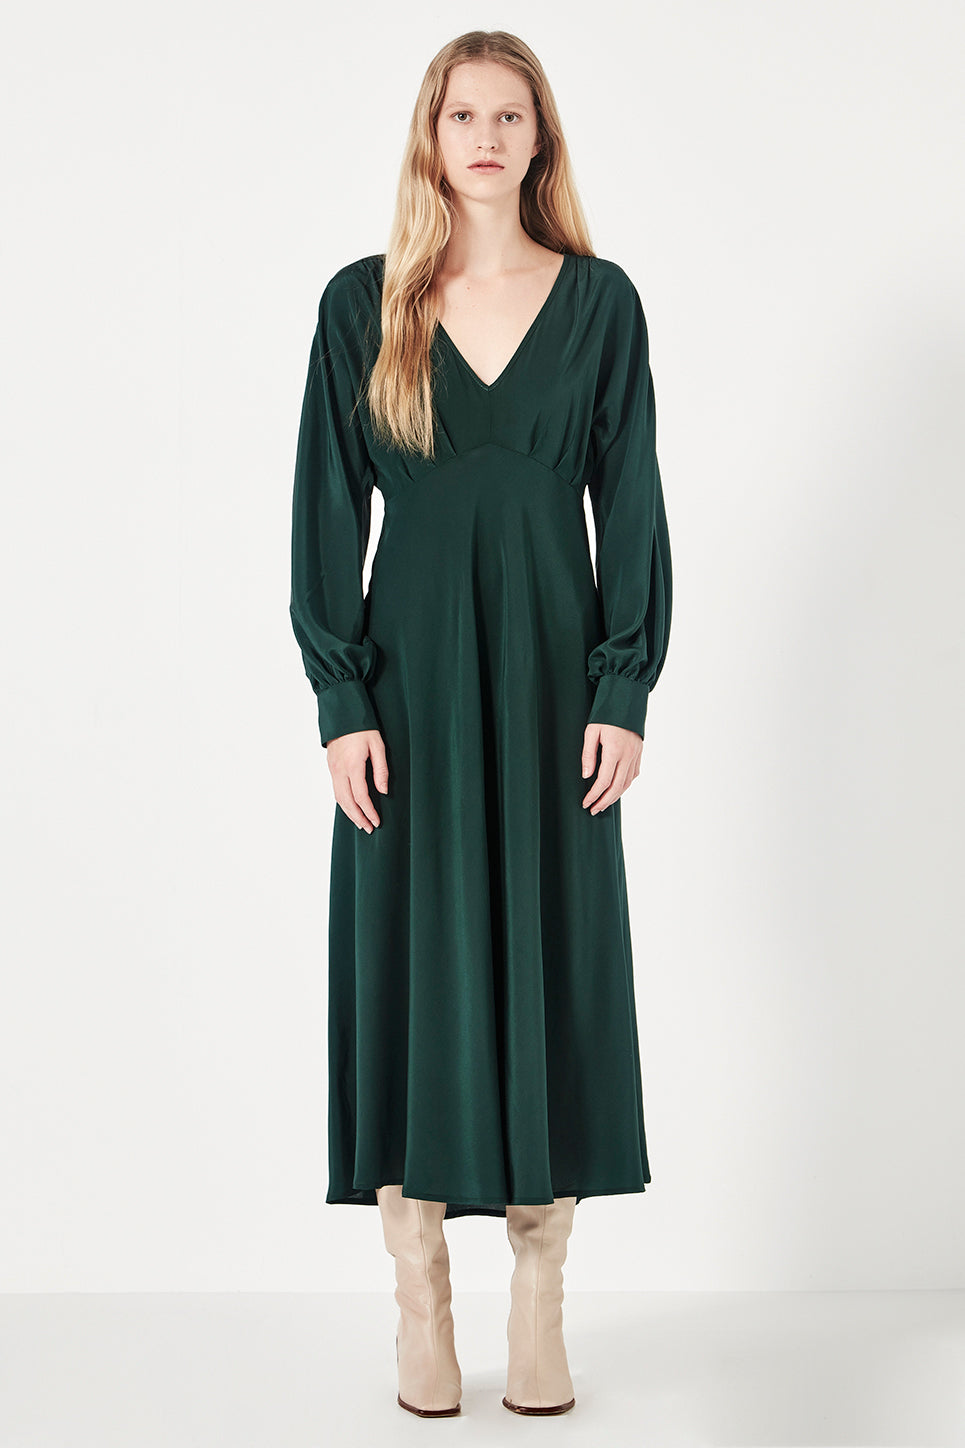 The Vionnet Dress in Emerald